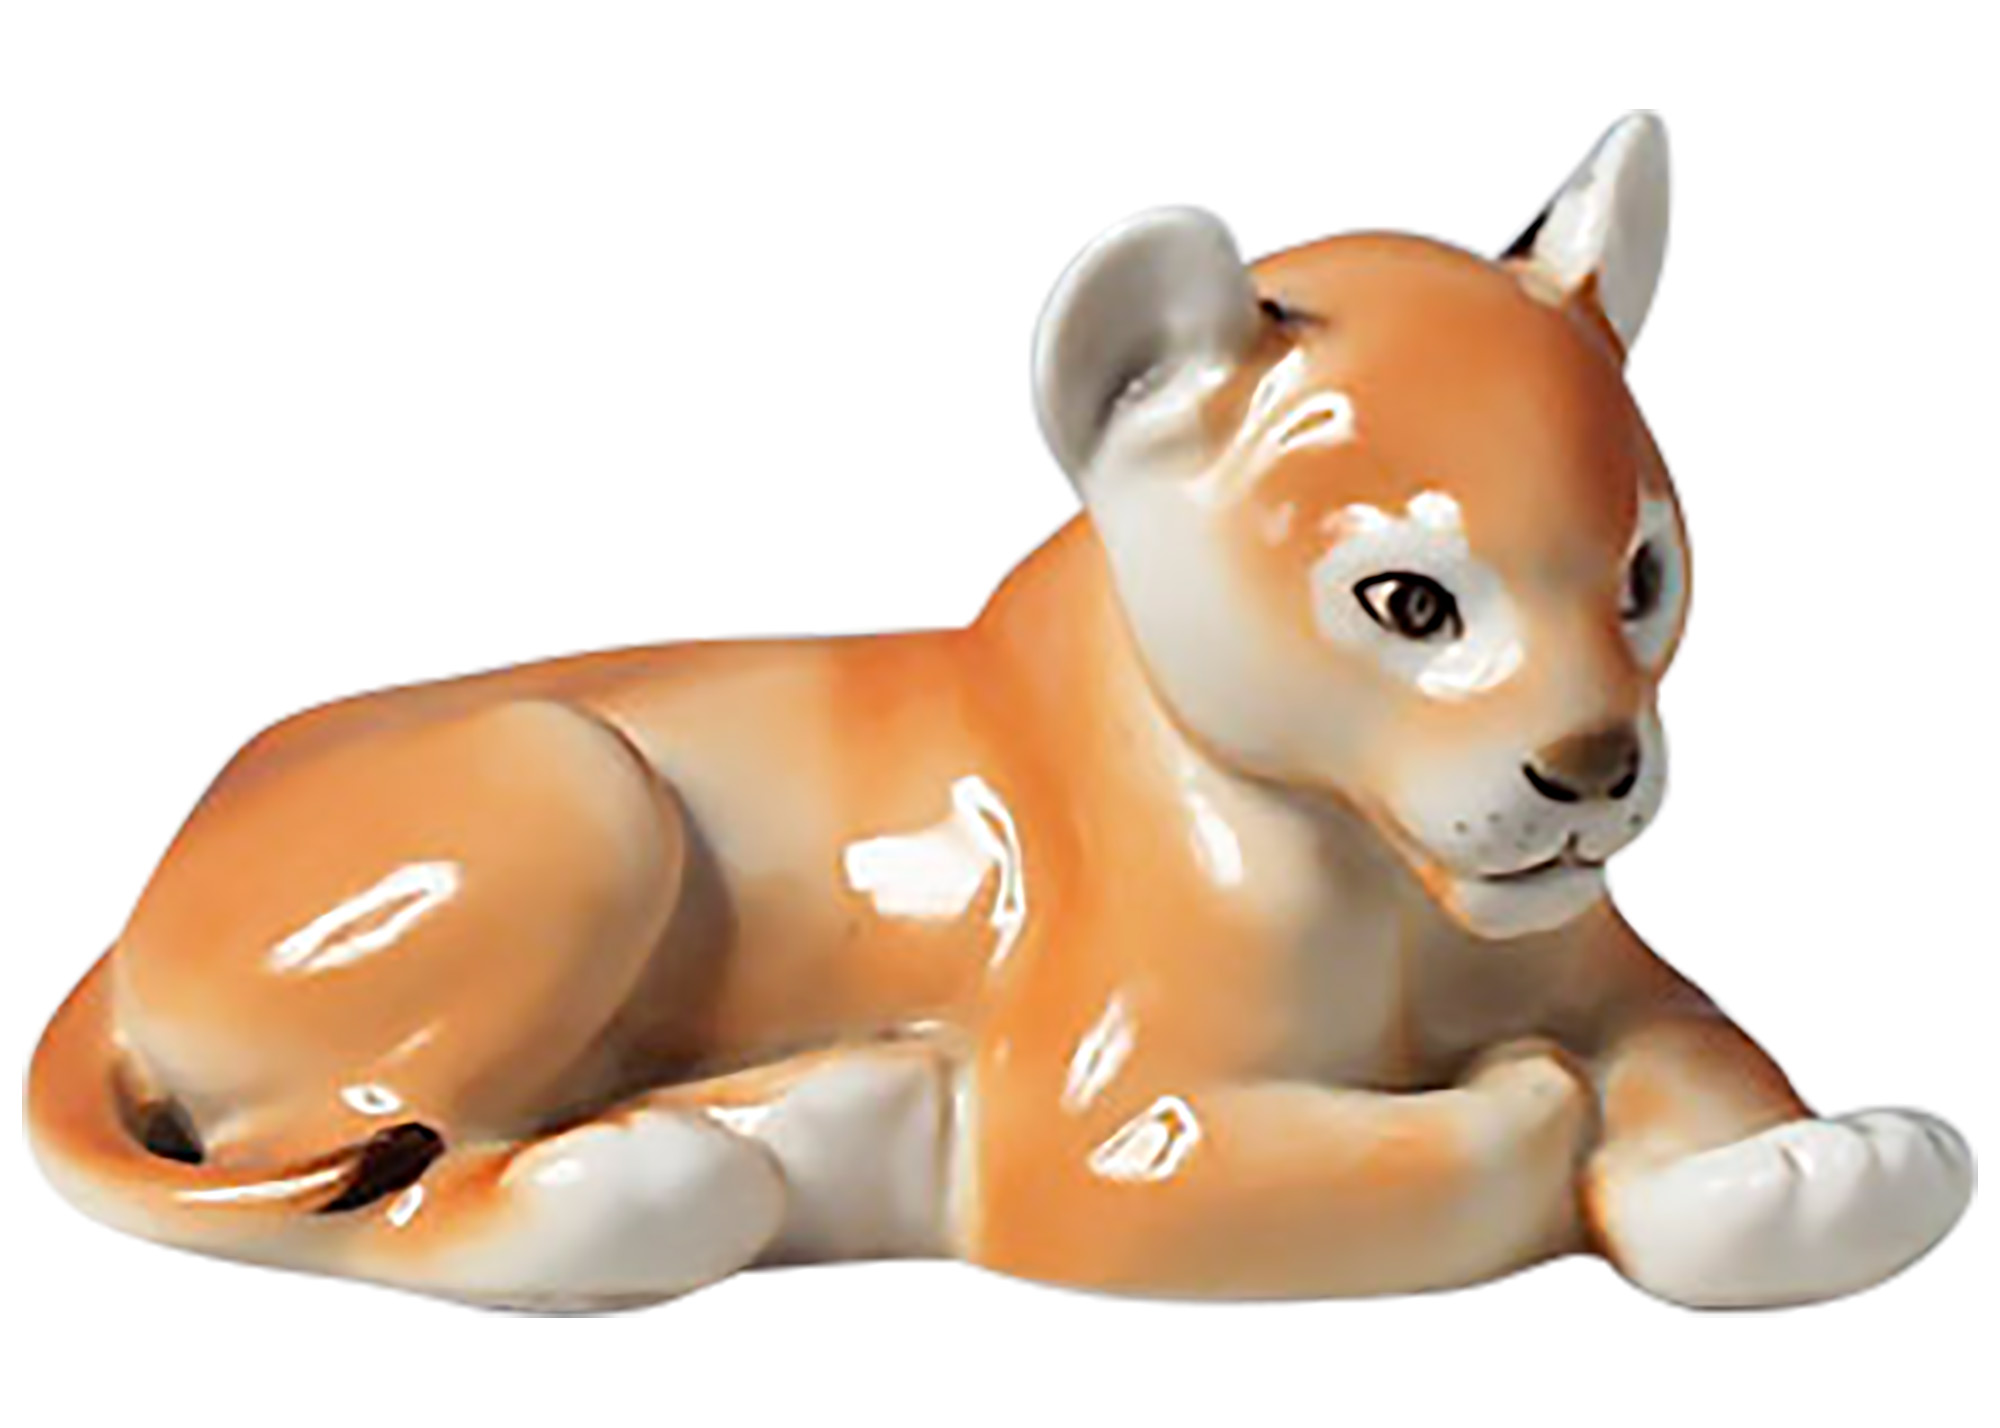 Buy Resting Lion Cub Figurine at GoldenCockerel.com